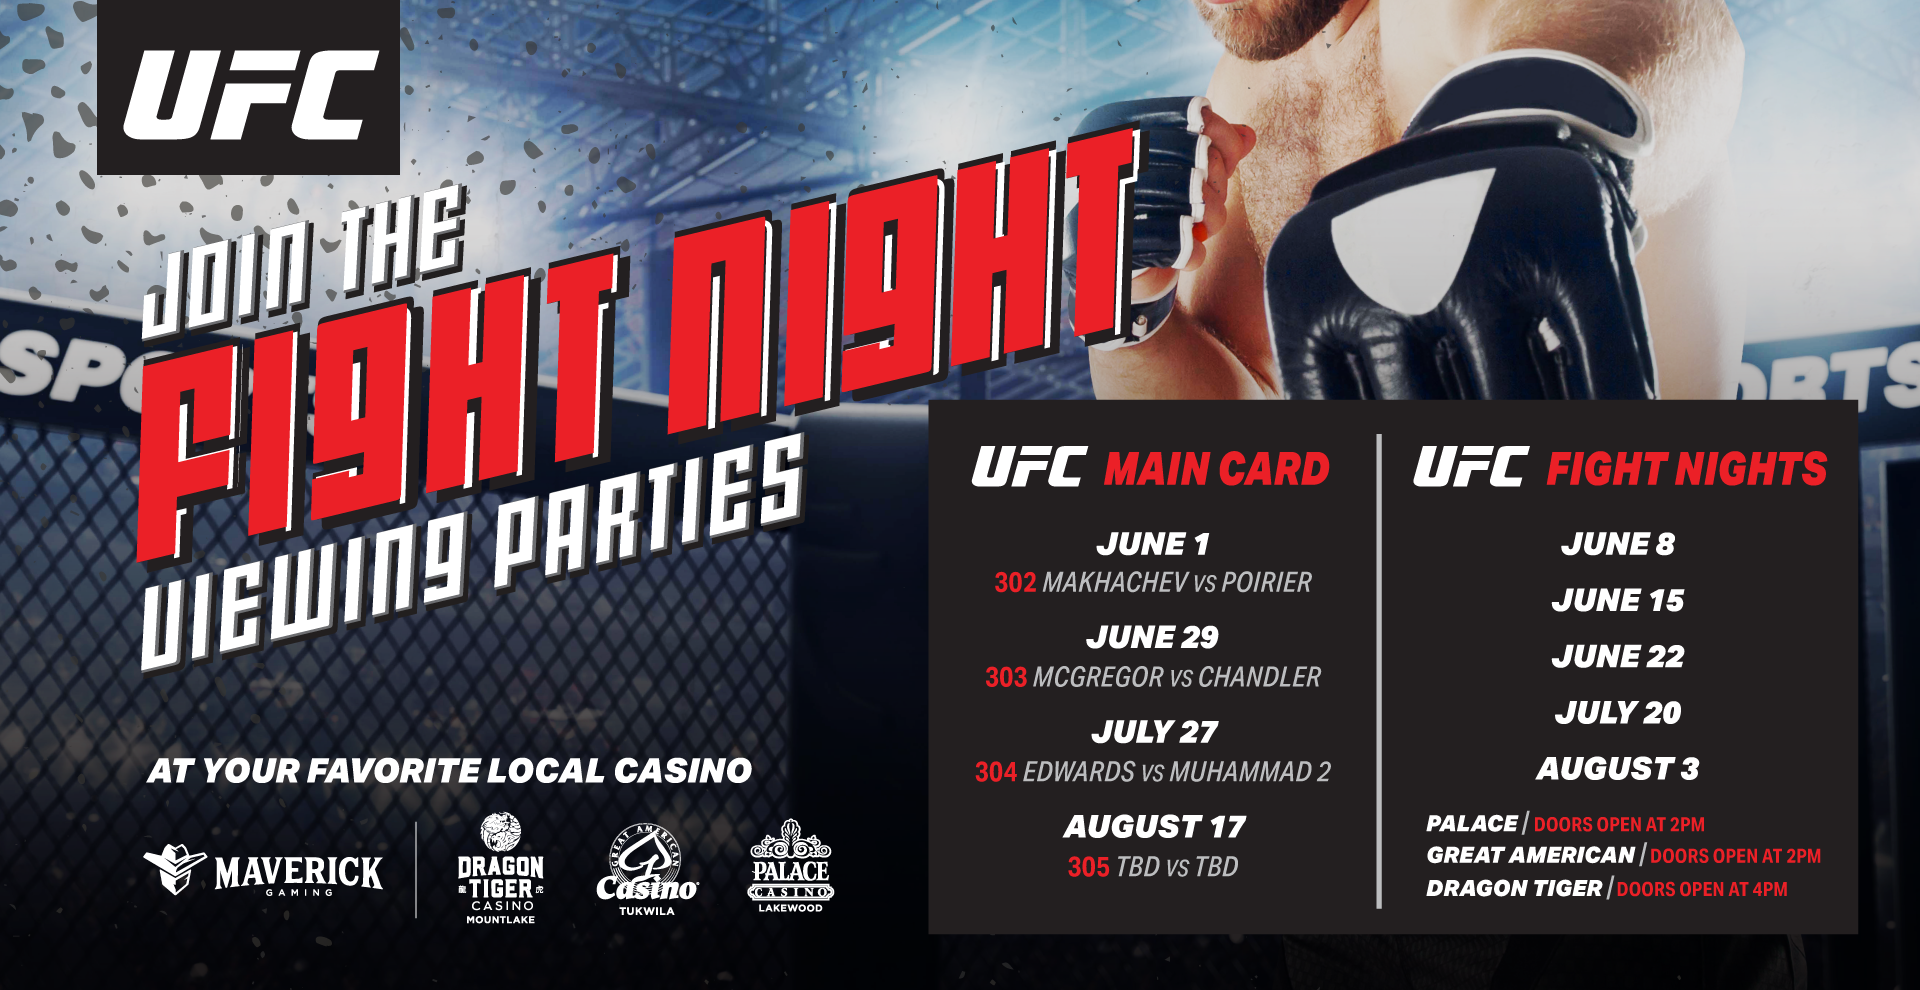 Dragon Tiger Casino - Great American Tukwila Casino - Palace Casino | UFC Fight Nights